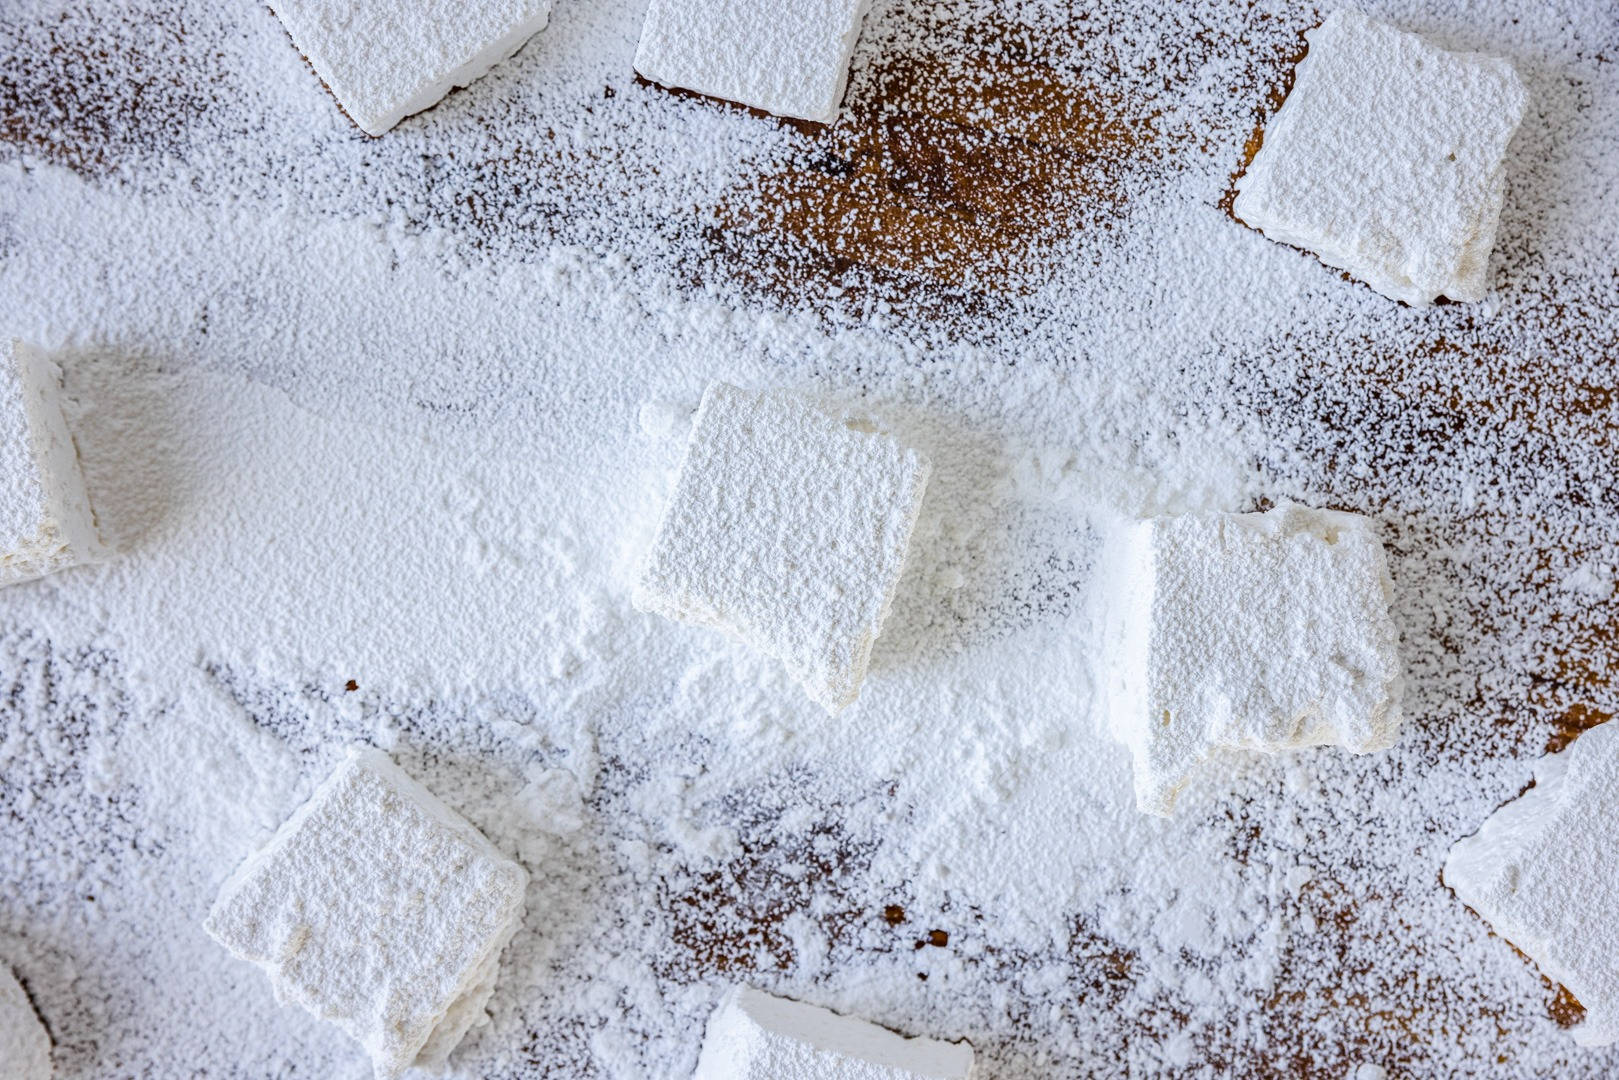 Caption: A Delicious Bite Waiting - Delicate White Marshmallows Wallpaper